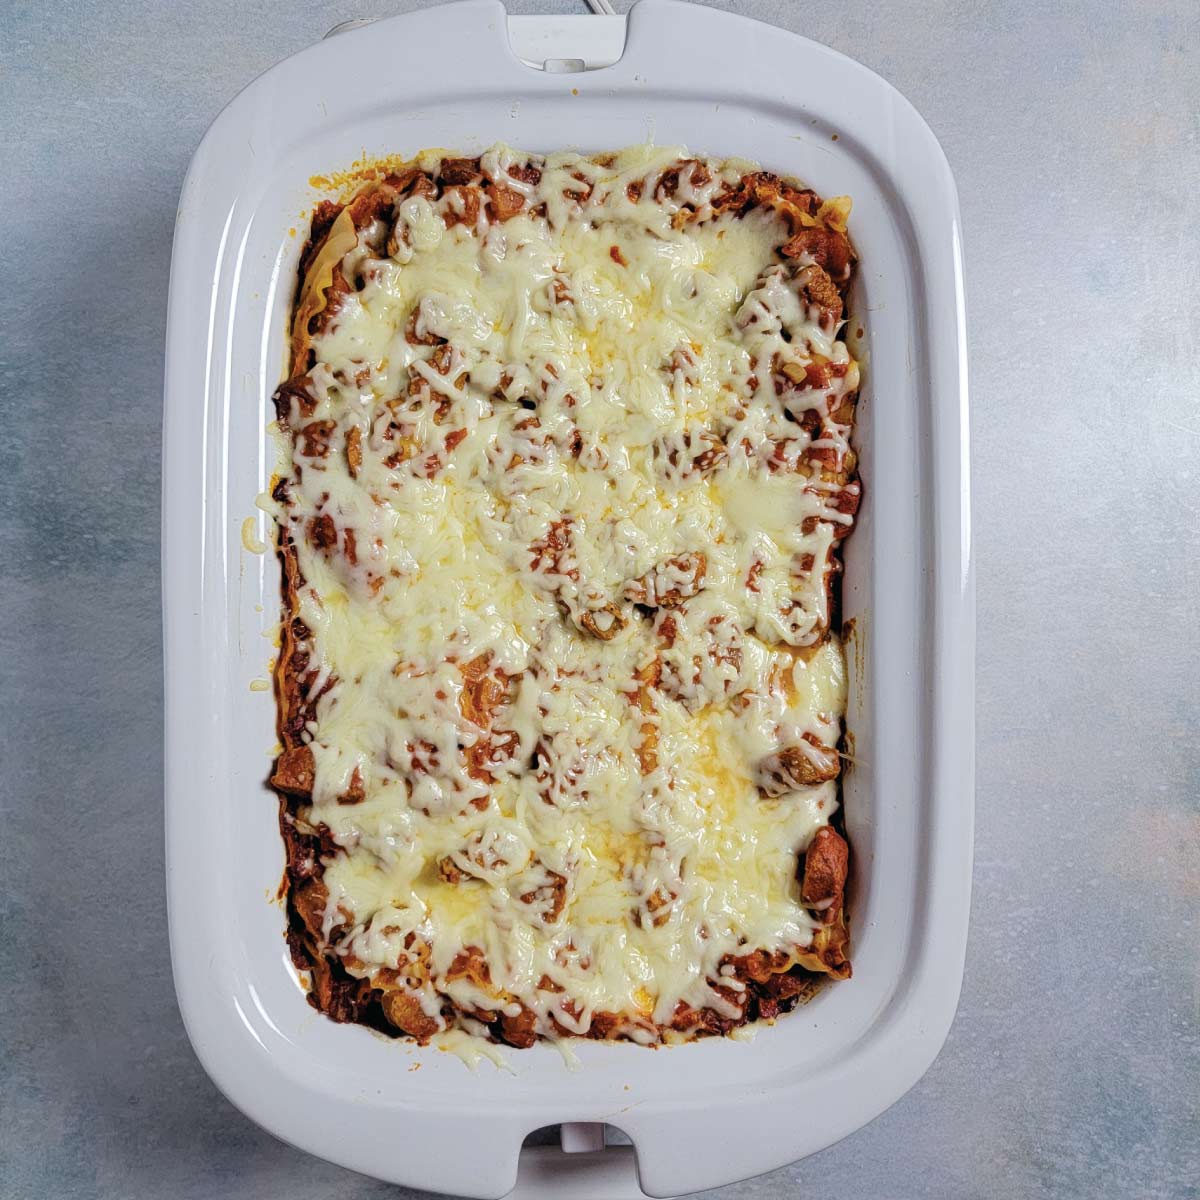 Lasagna in the casserole Crock-Pot resting before cutting.